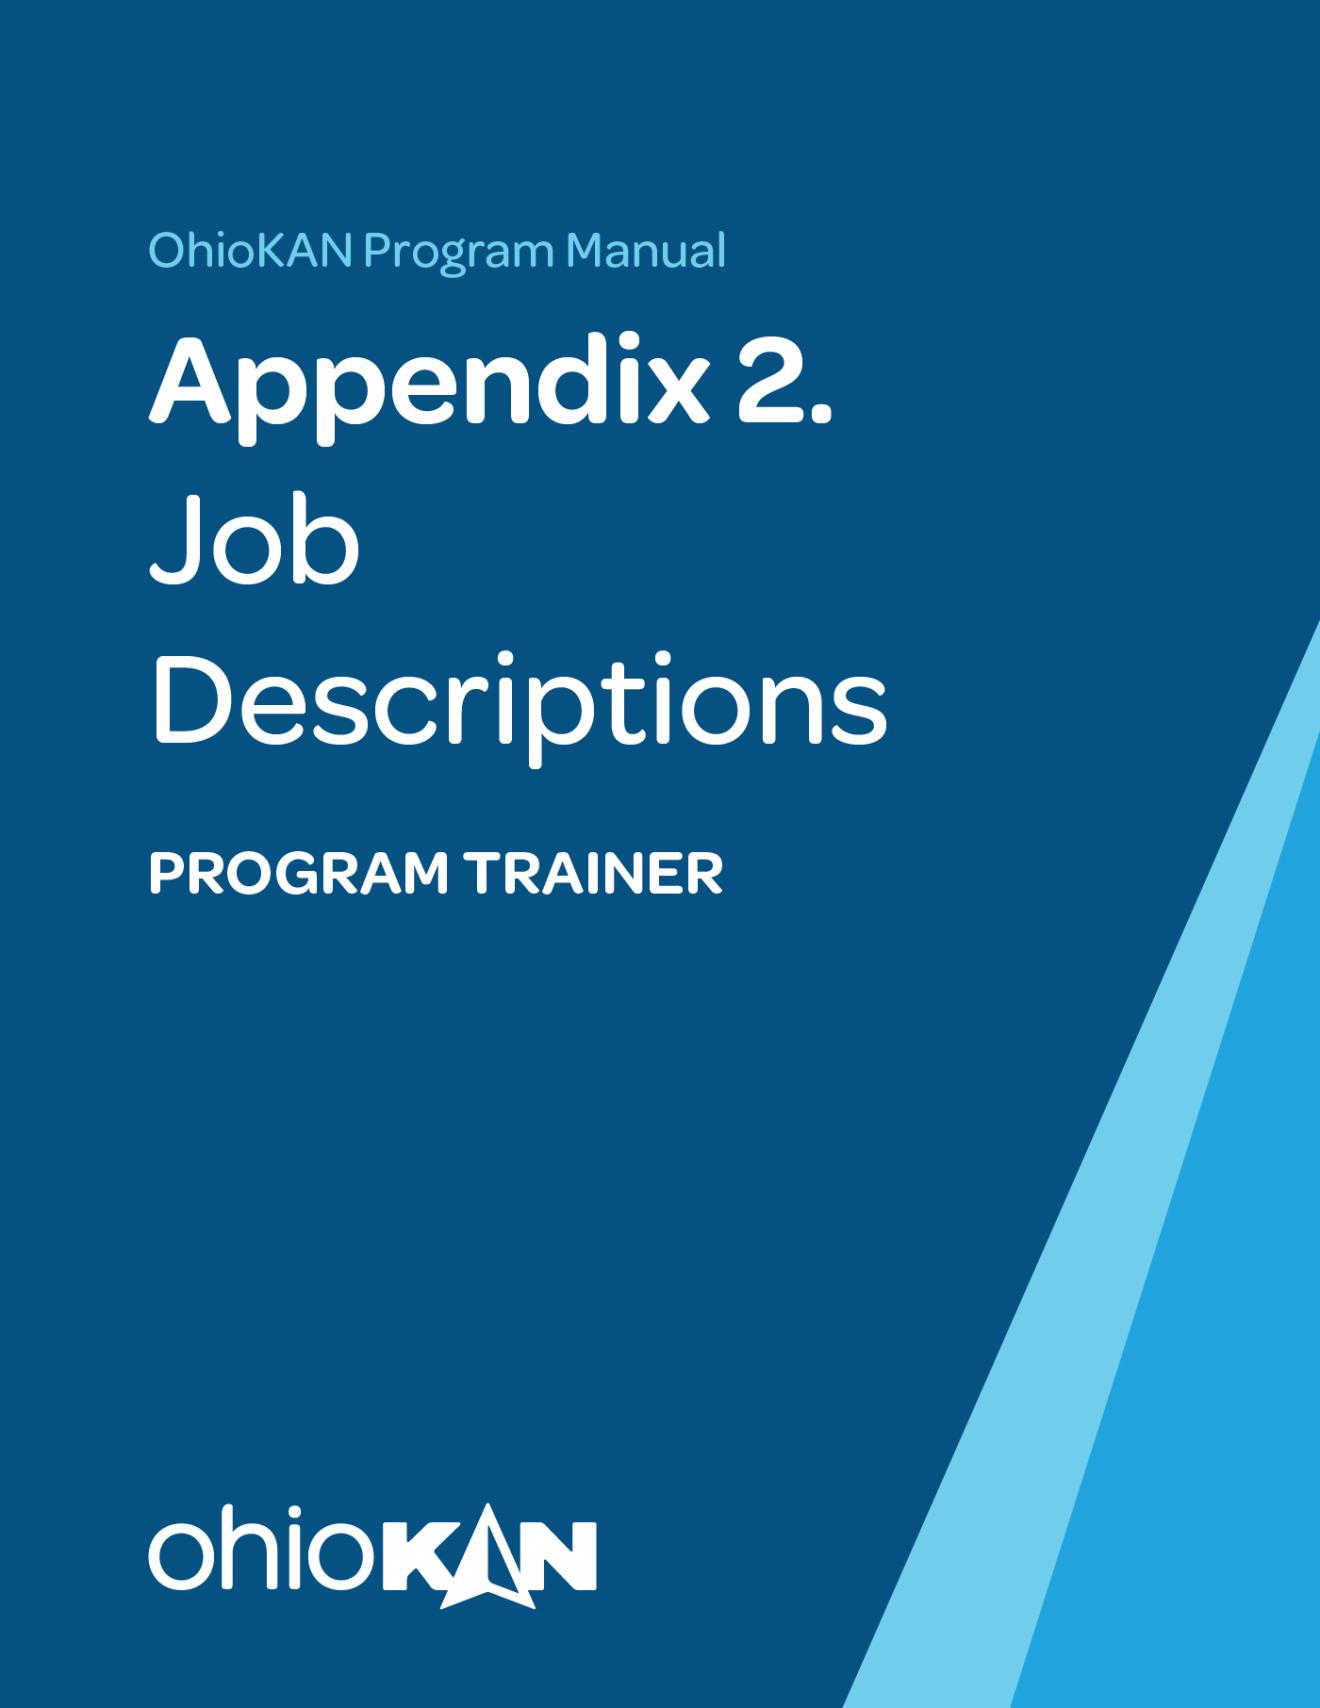 Appendix 2 Program Trainer